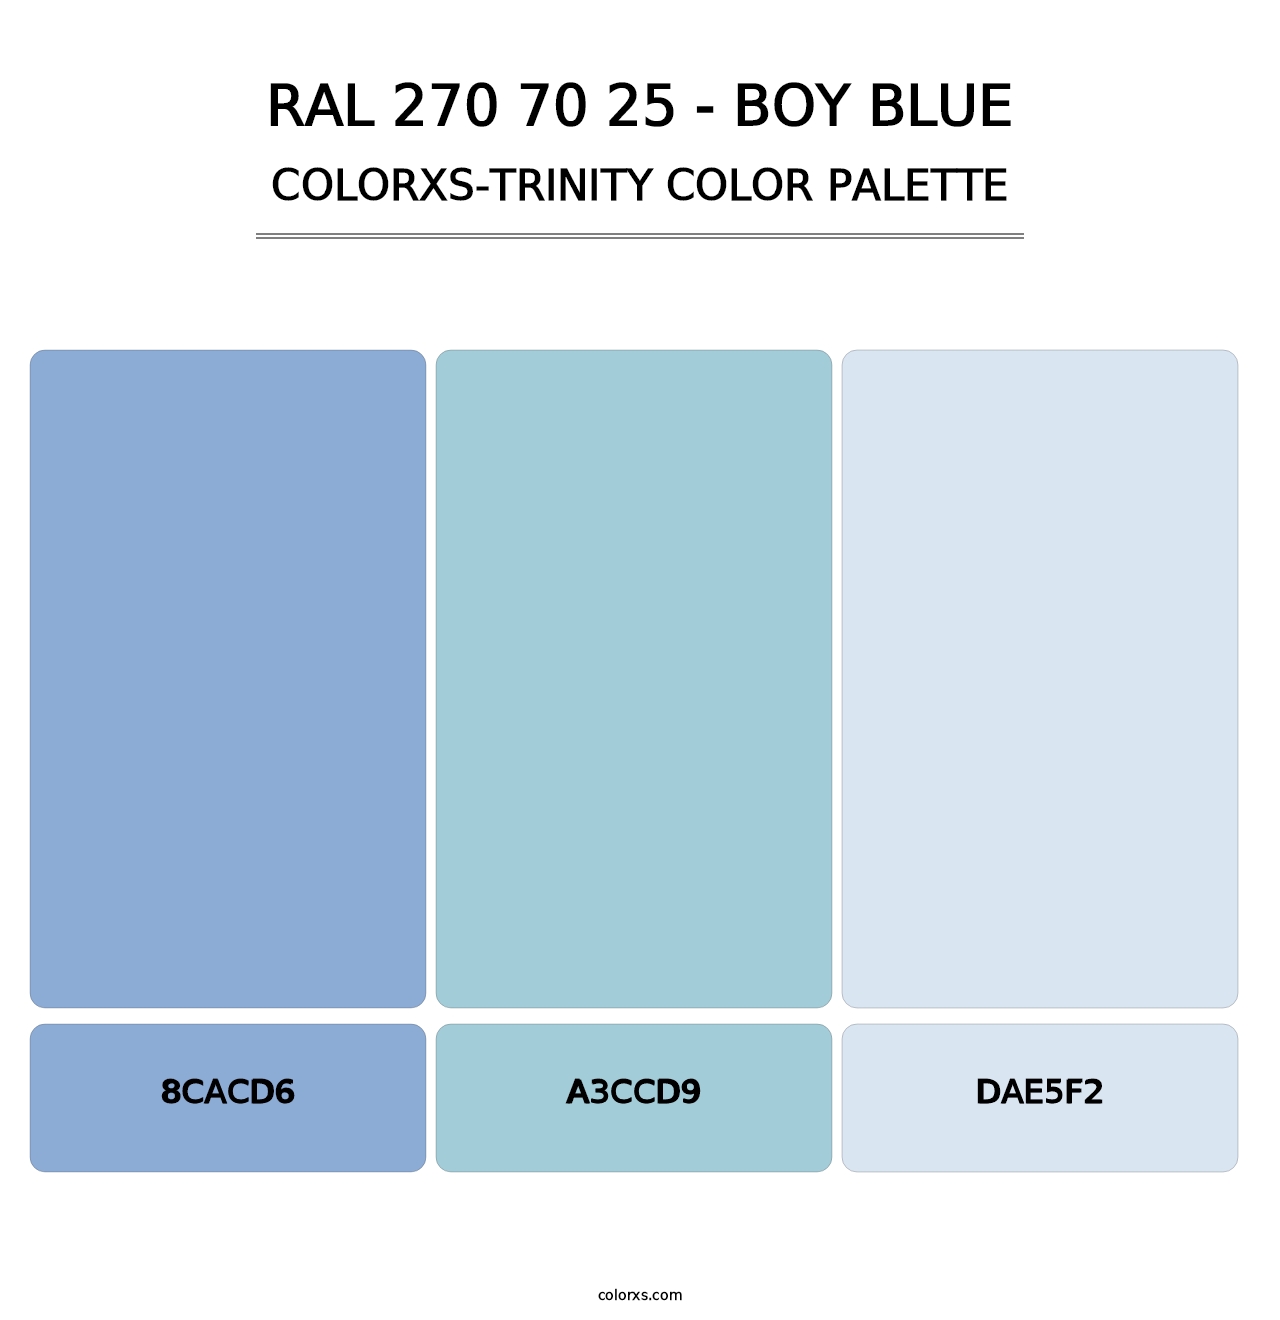 RAL 270 70 25 - Boy Blue - Colorxs Trinity Palette